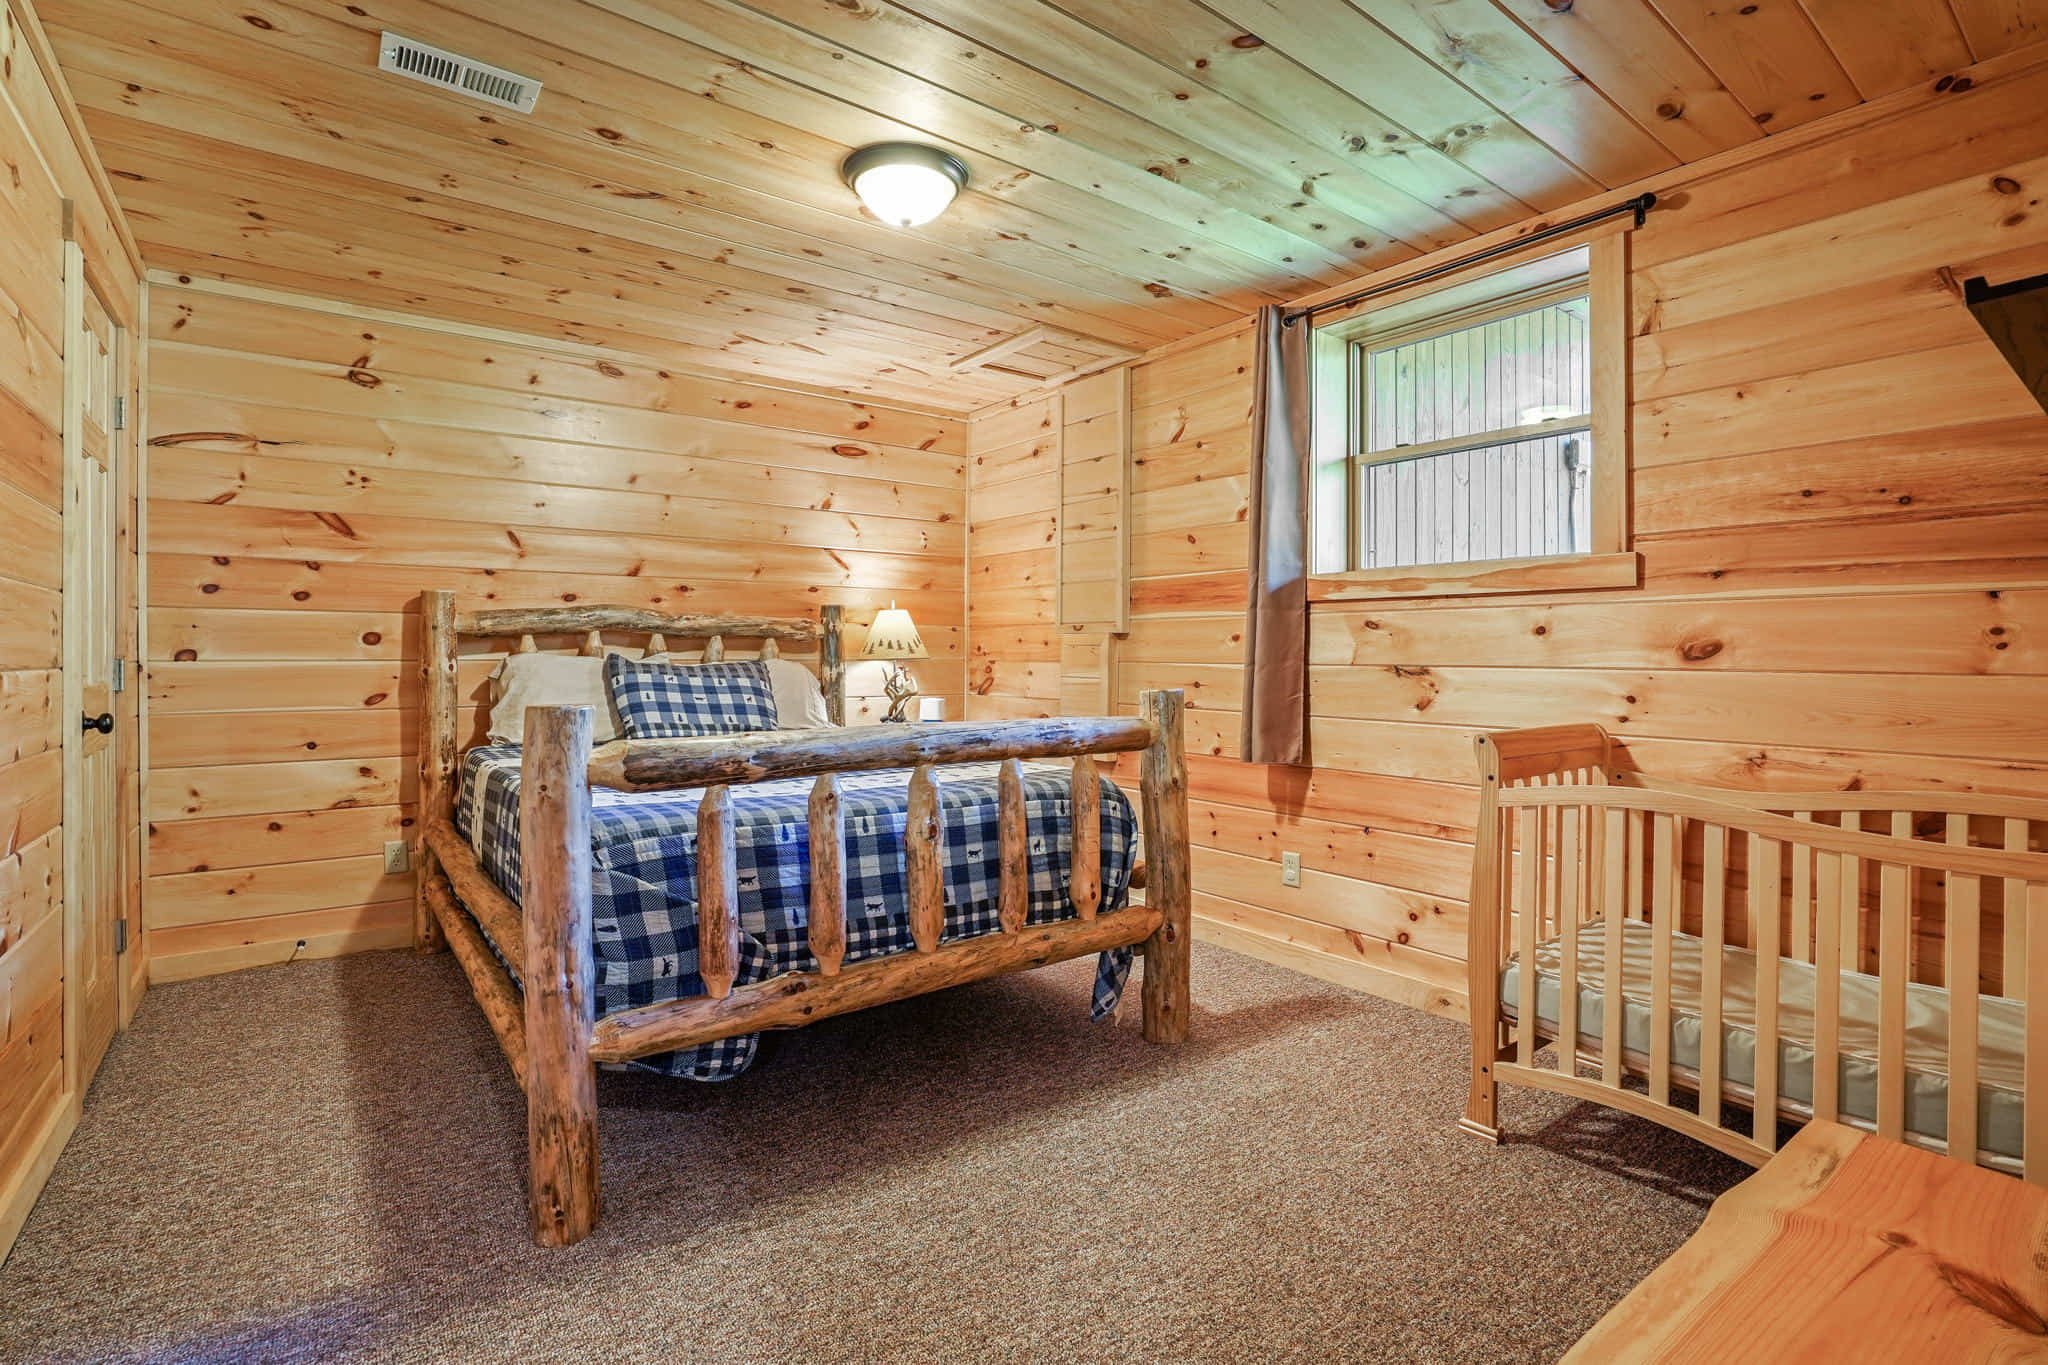 Crib in Bedroom in River Rock Lodge in Hocking Hills ohio